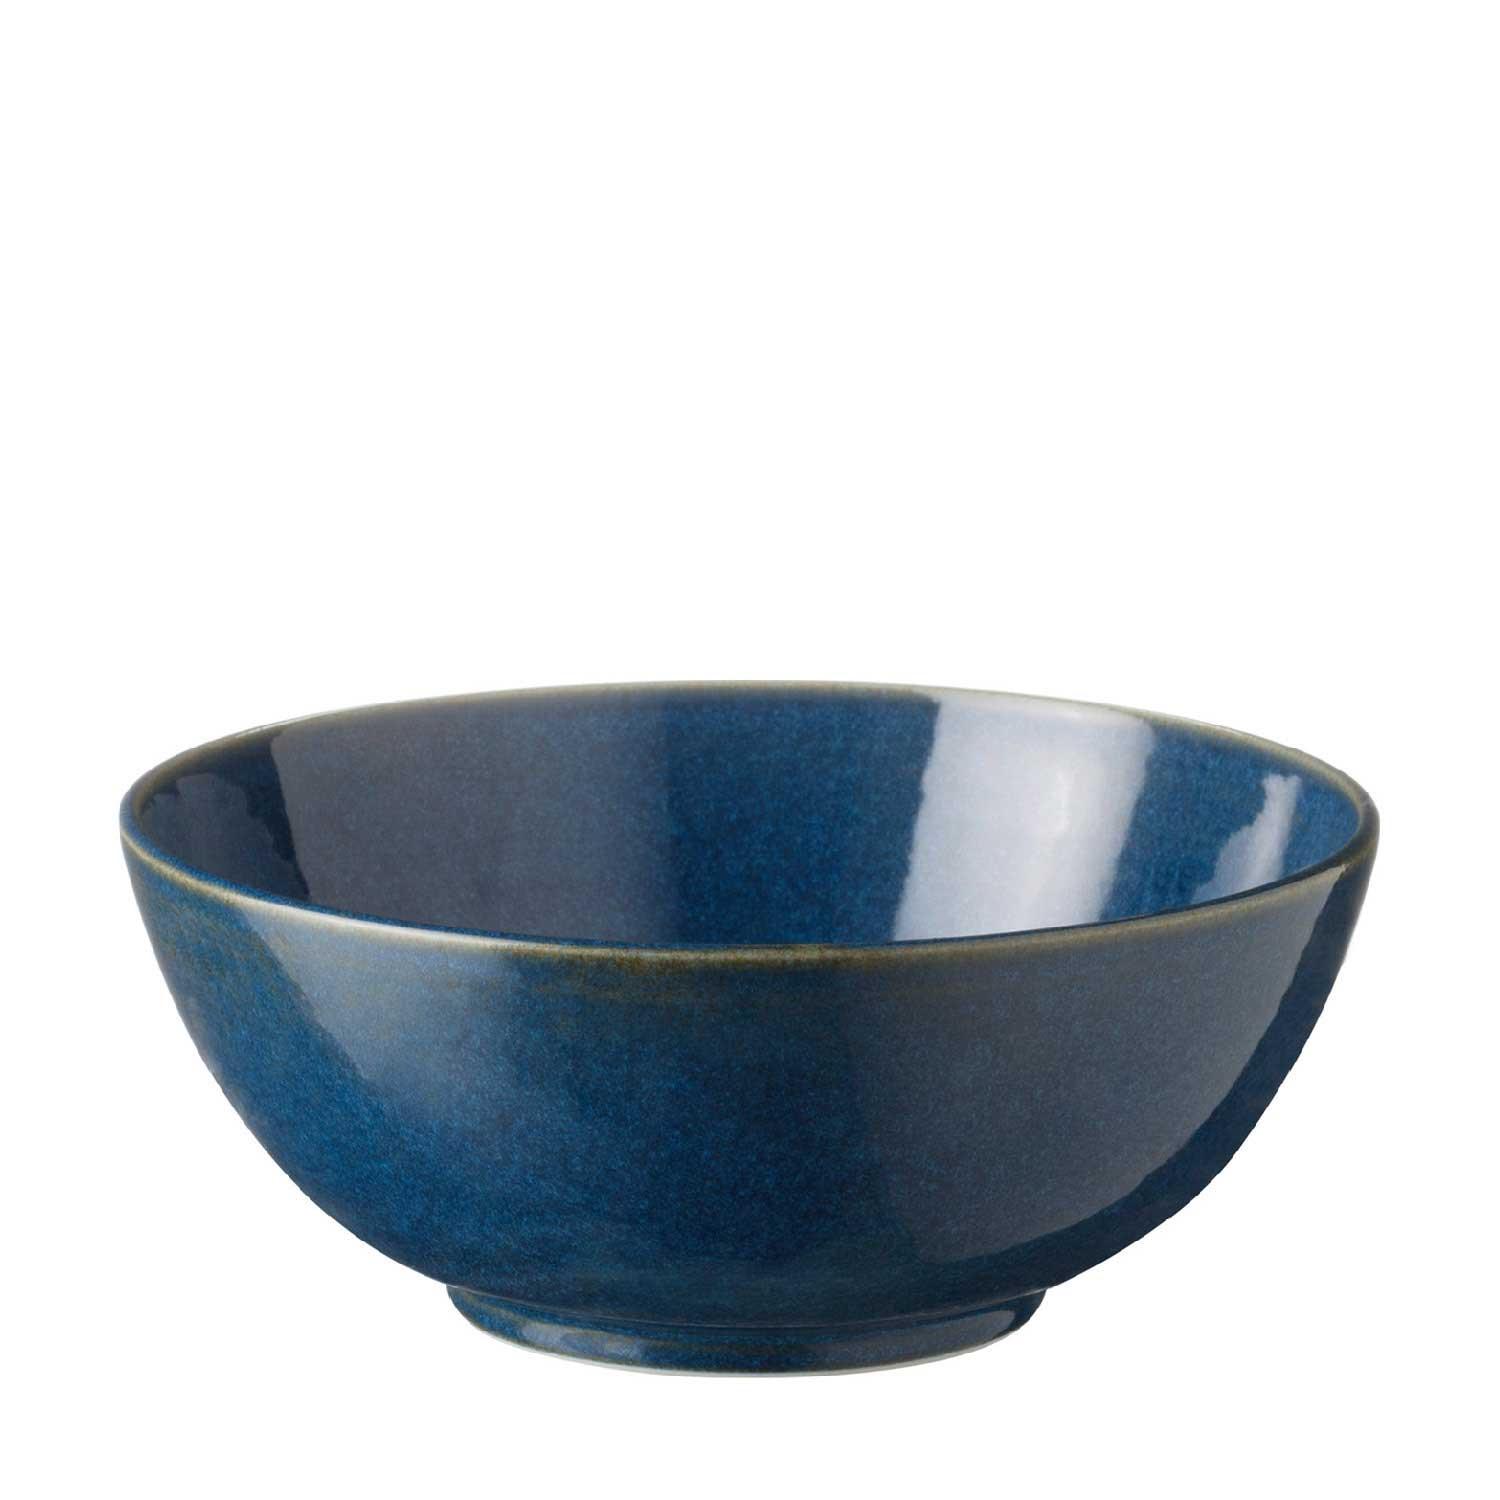 large-classic-round-soup-bowl-varied-blue-jenggala-keramik-bali-ceramic